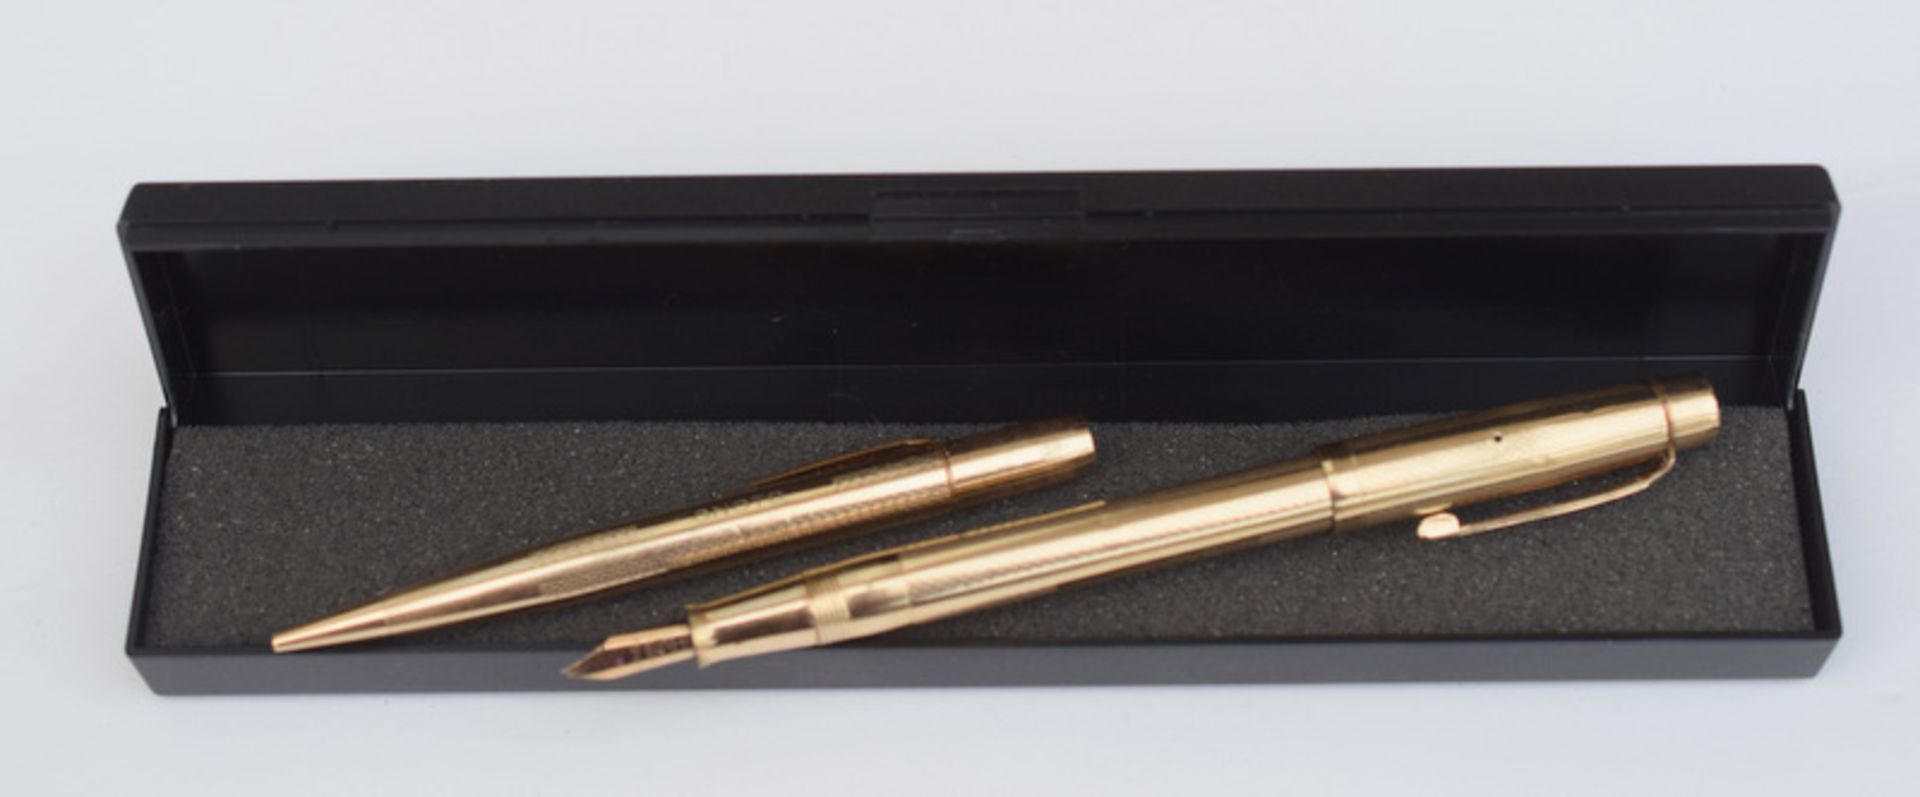 Onoto Pen And Pencil Set